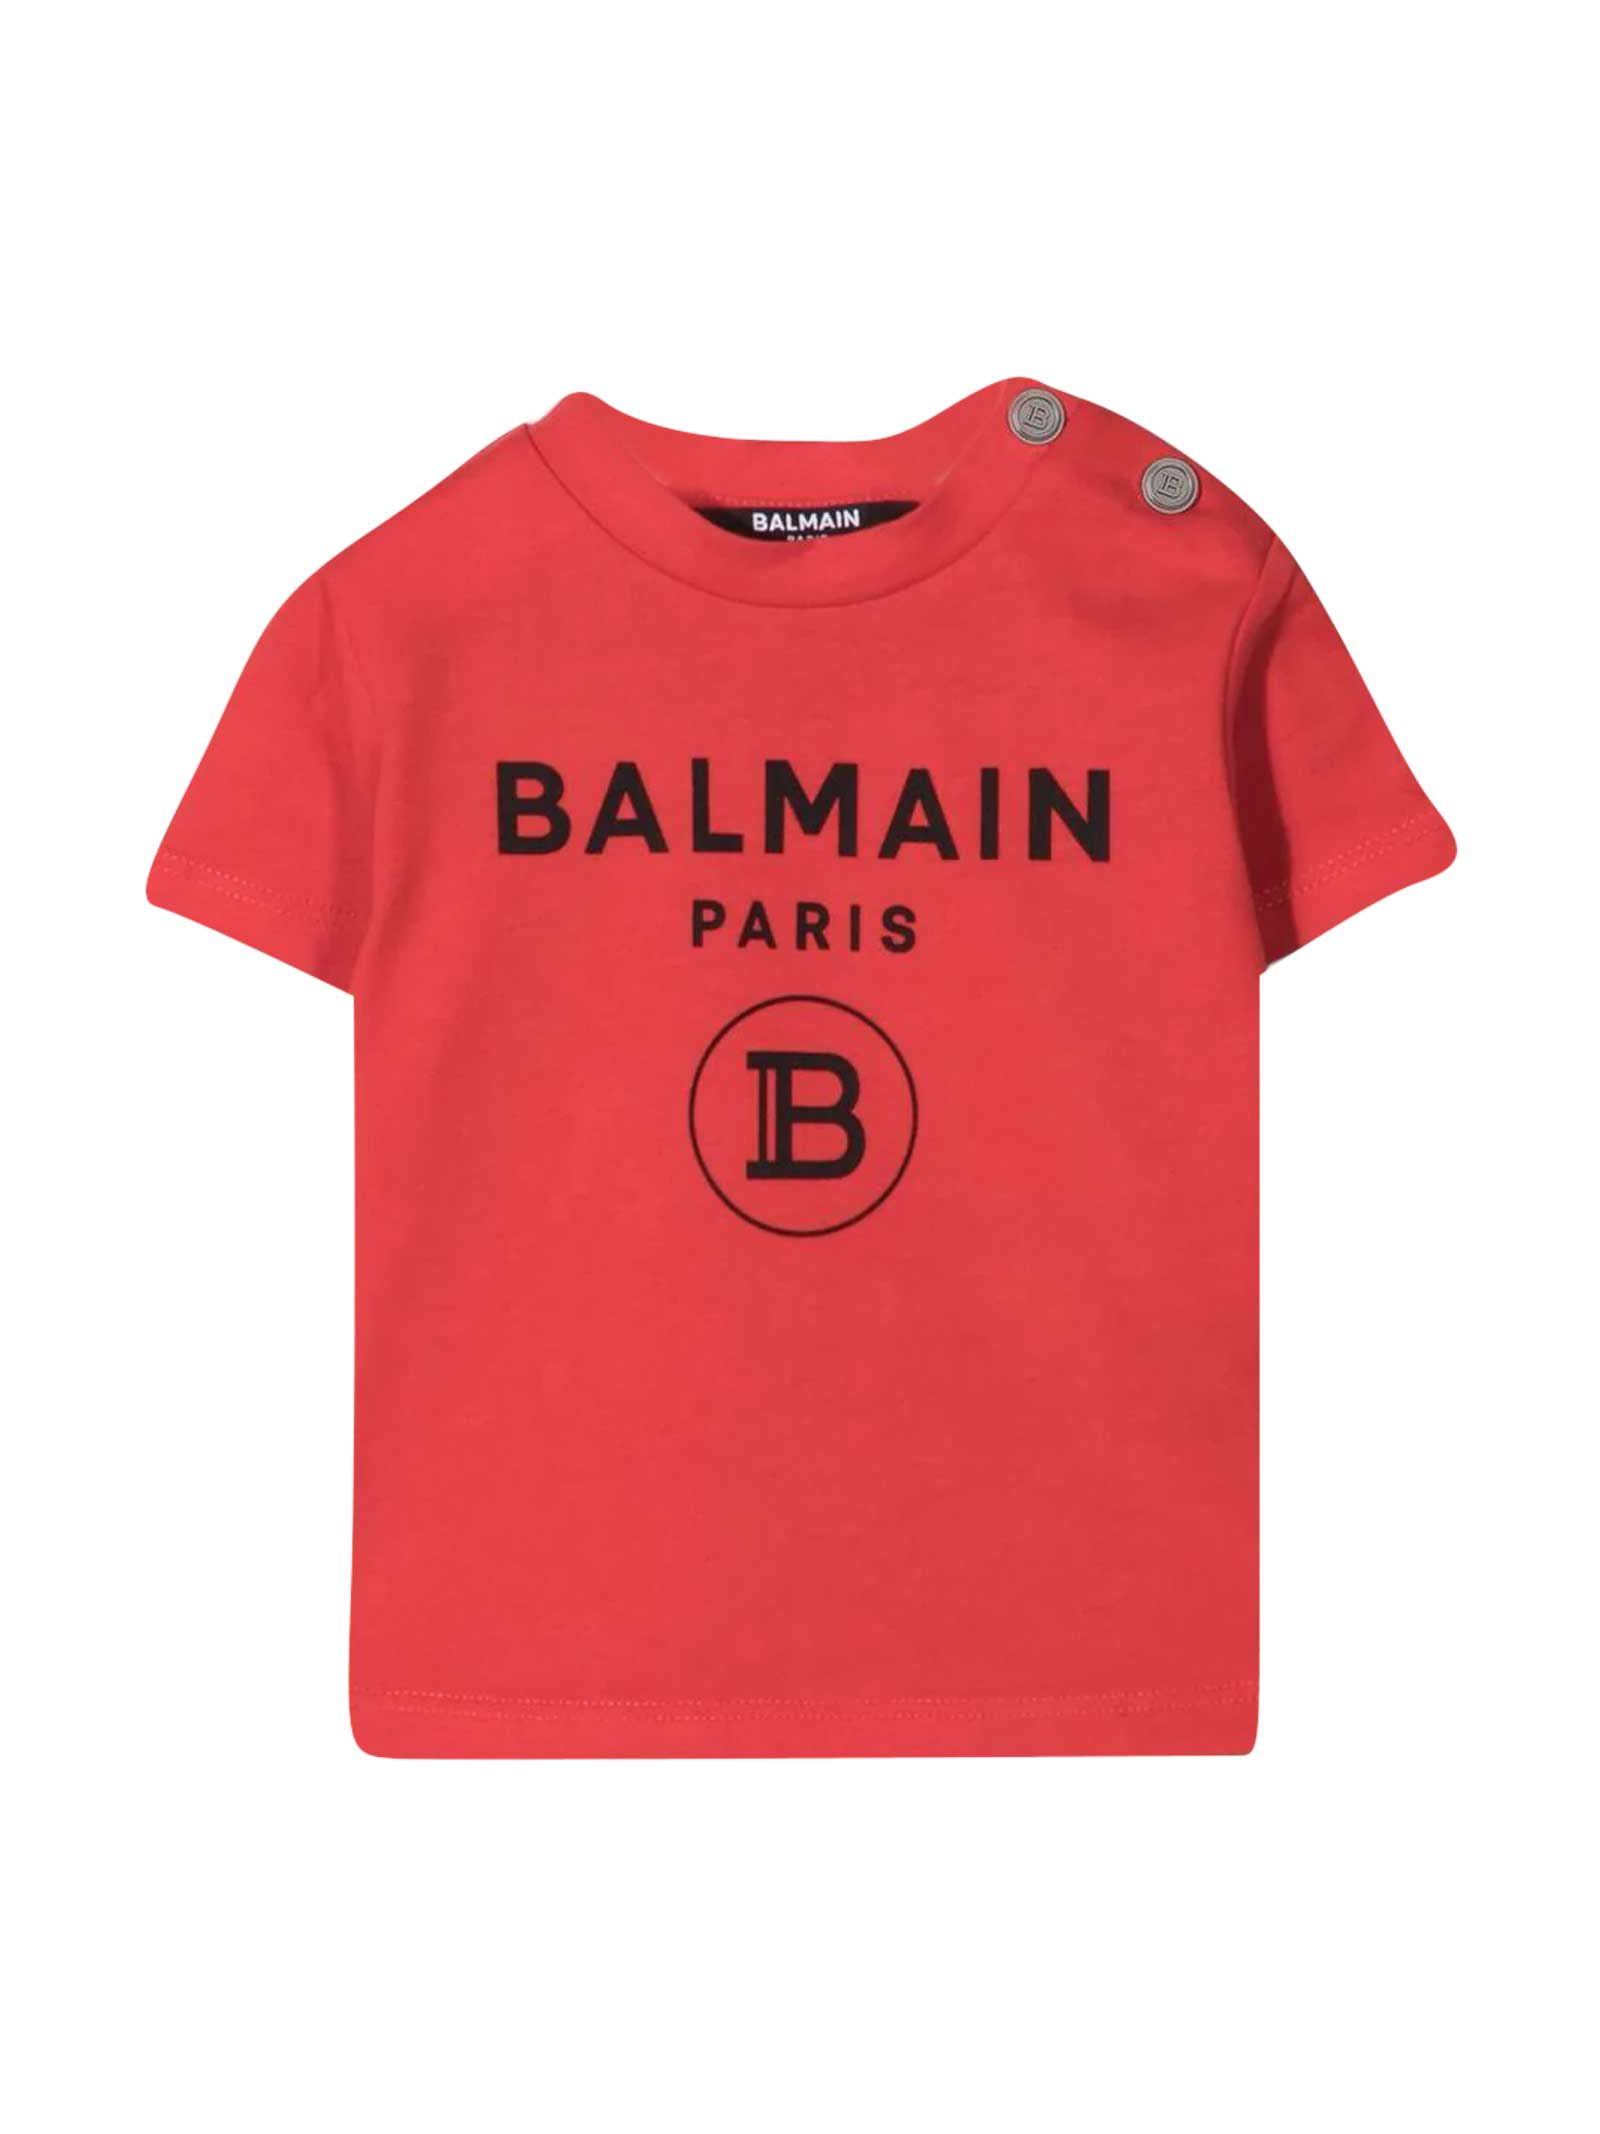 BALMAIN RED T-SHIRT,11868119